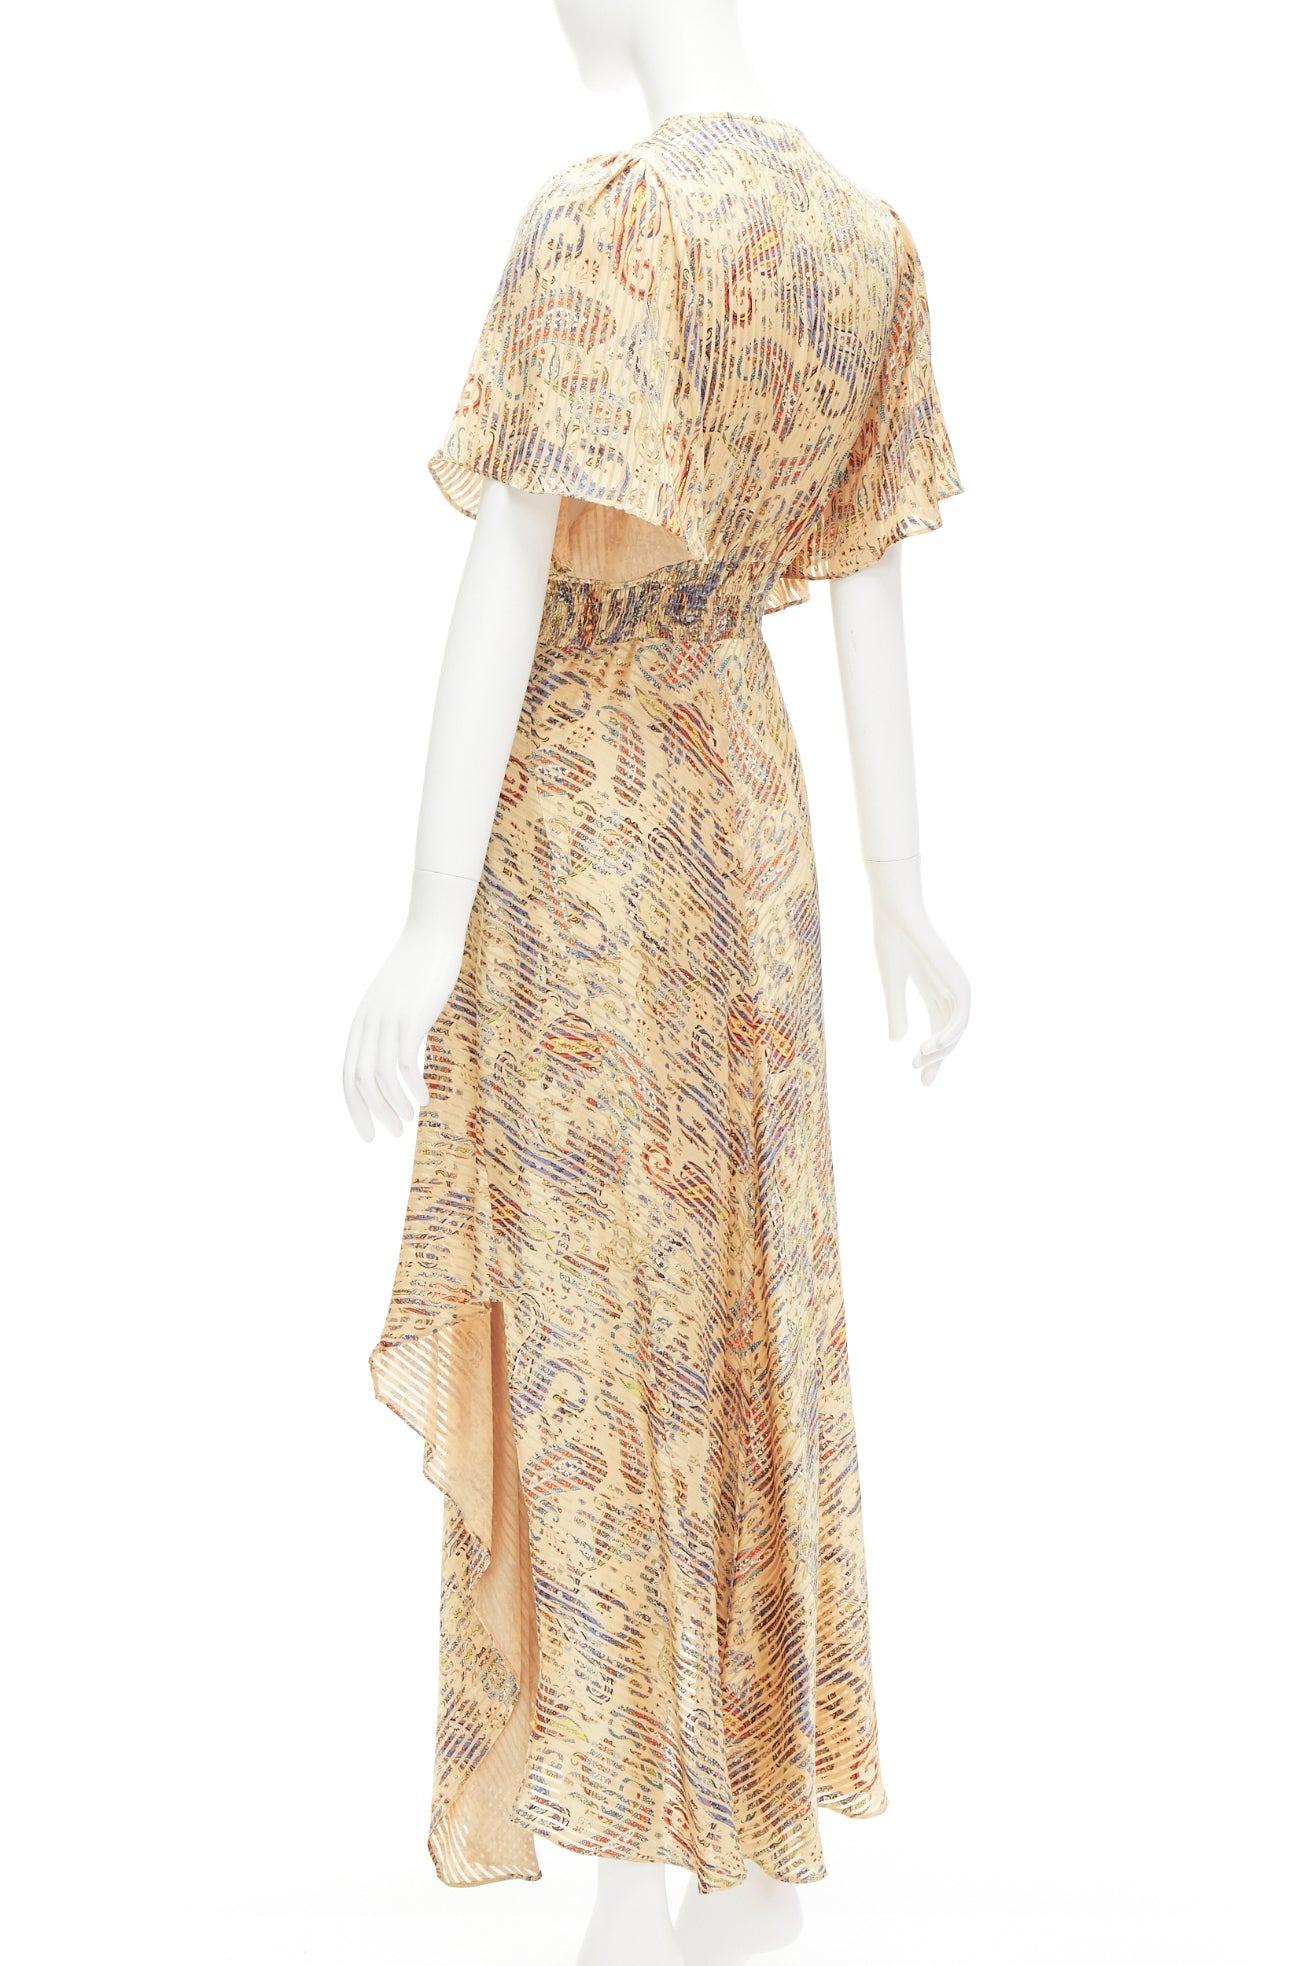 MAJE Rachel gold colourful paisley print handkerchief hem deep V dress Size1 S For Sale 1